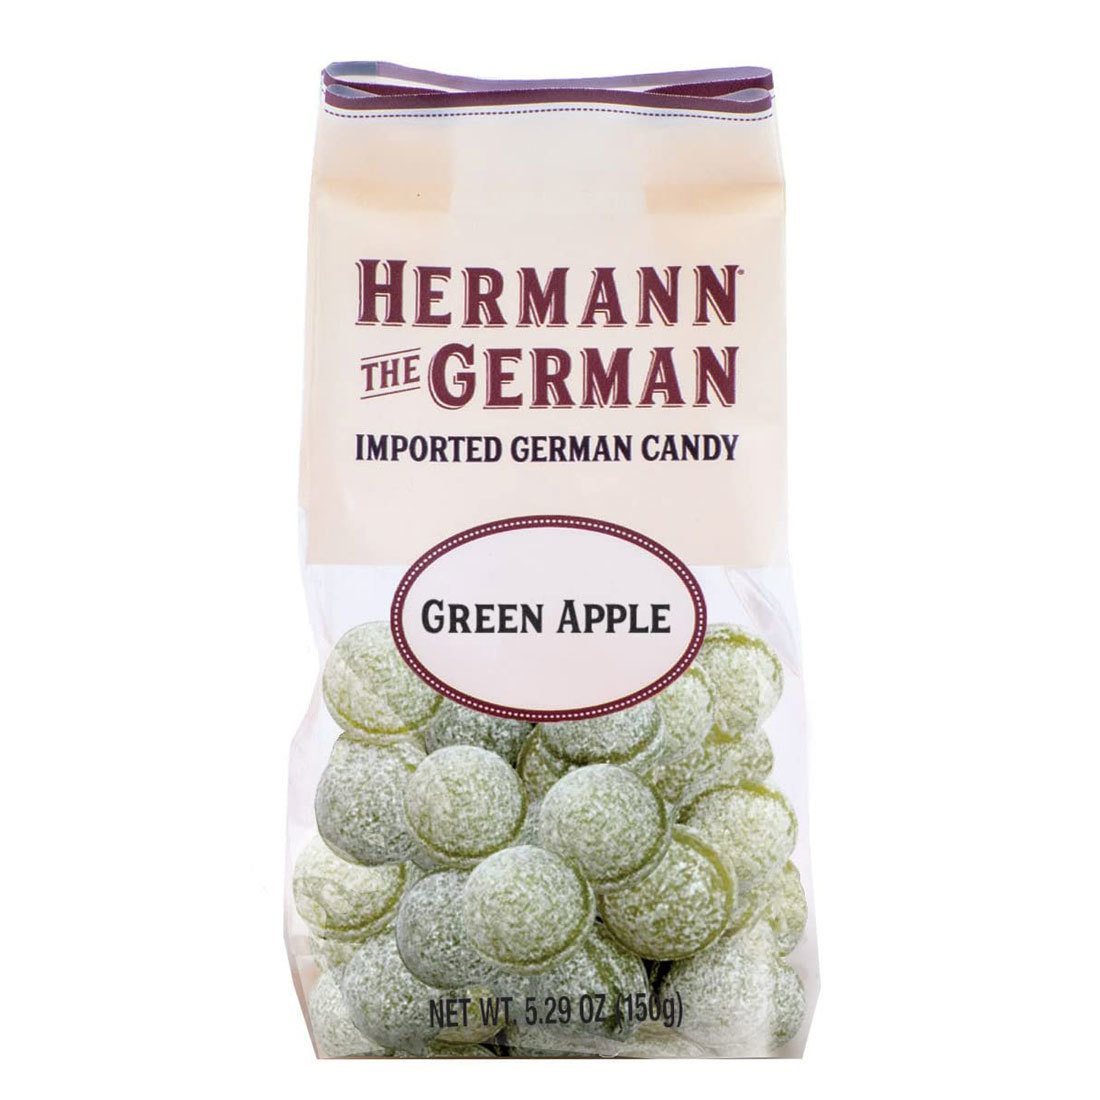 Hermann the German- Green Apple (Gruener Apfel) Candy- 150g - $6.25